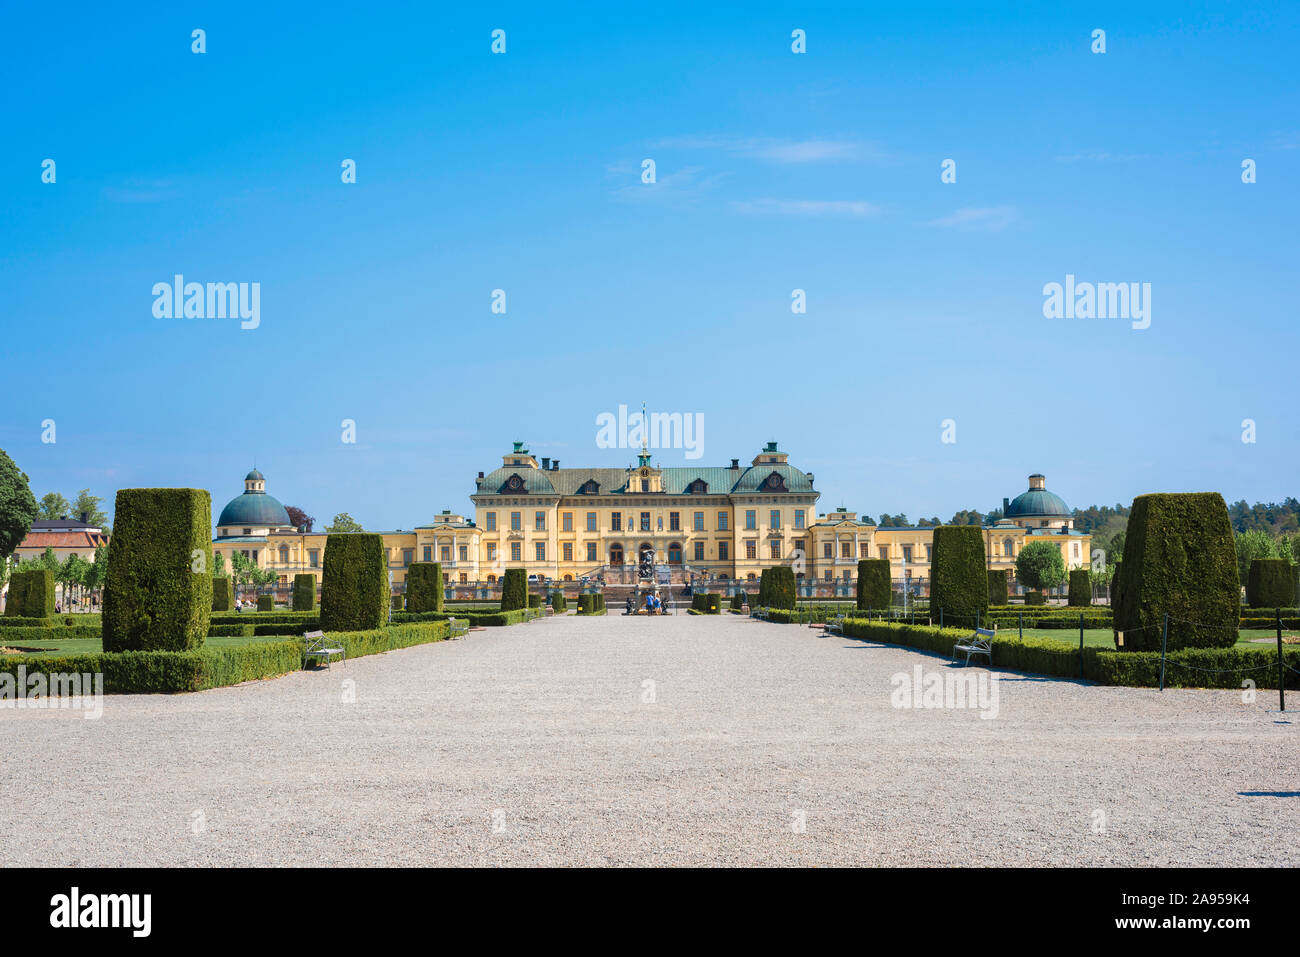 Reale di Drottningholm Palace, vista in estate il Castello di Drottningholm Palace con il suo giardino barocco in primo piano, Lovön isola, Svezia. Foto Stock